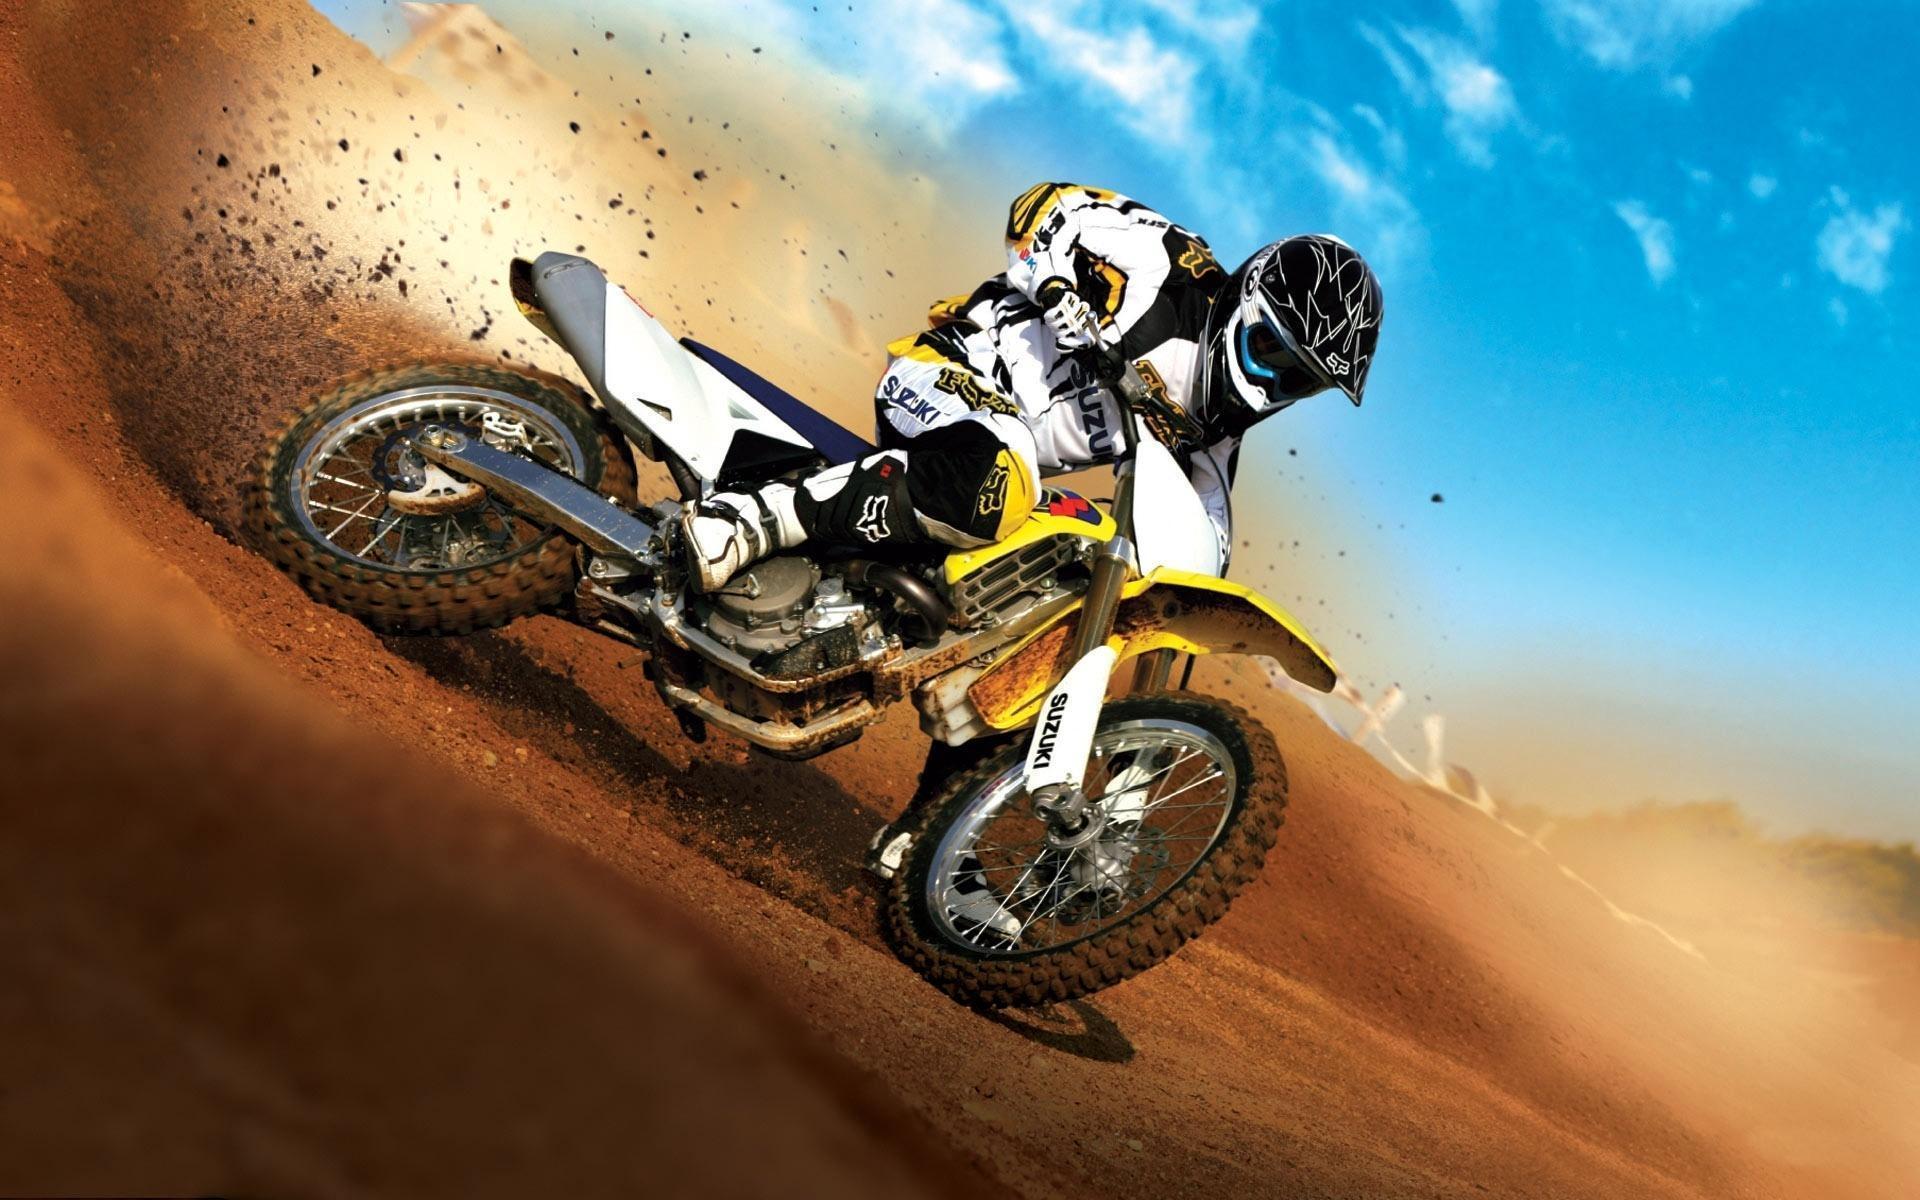 Super Dirt Bike and Motorcycle Wallpaper. Best HD